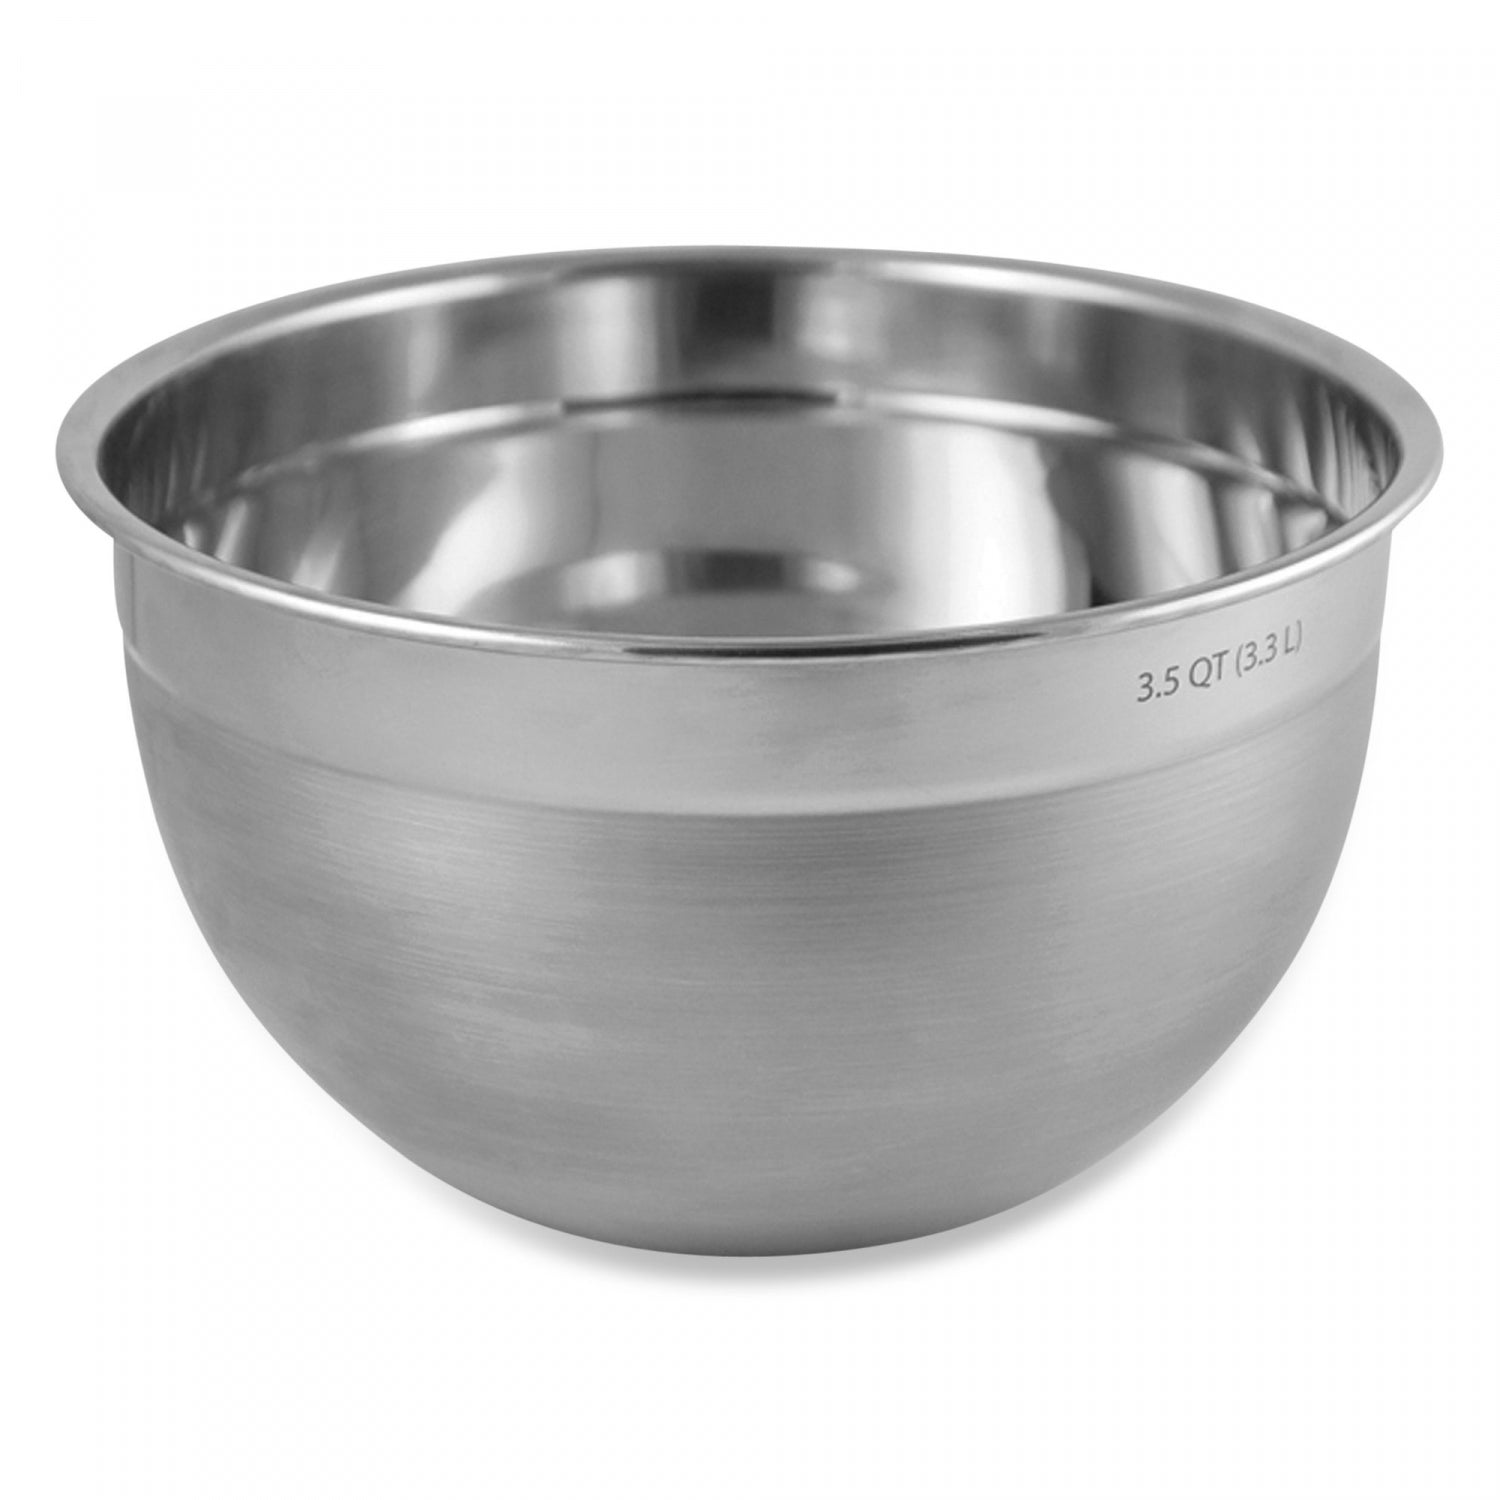 metro stainless steel mixing bowls